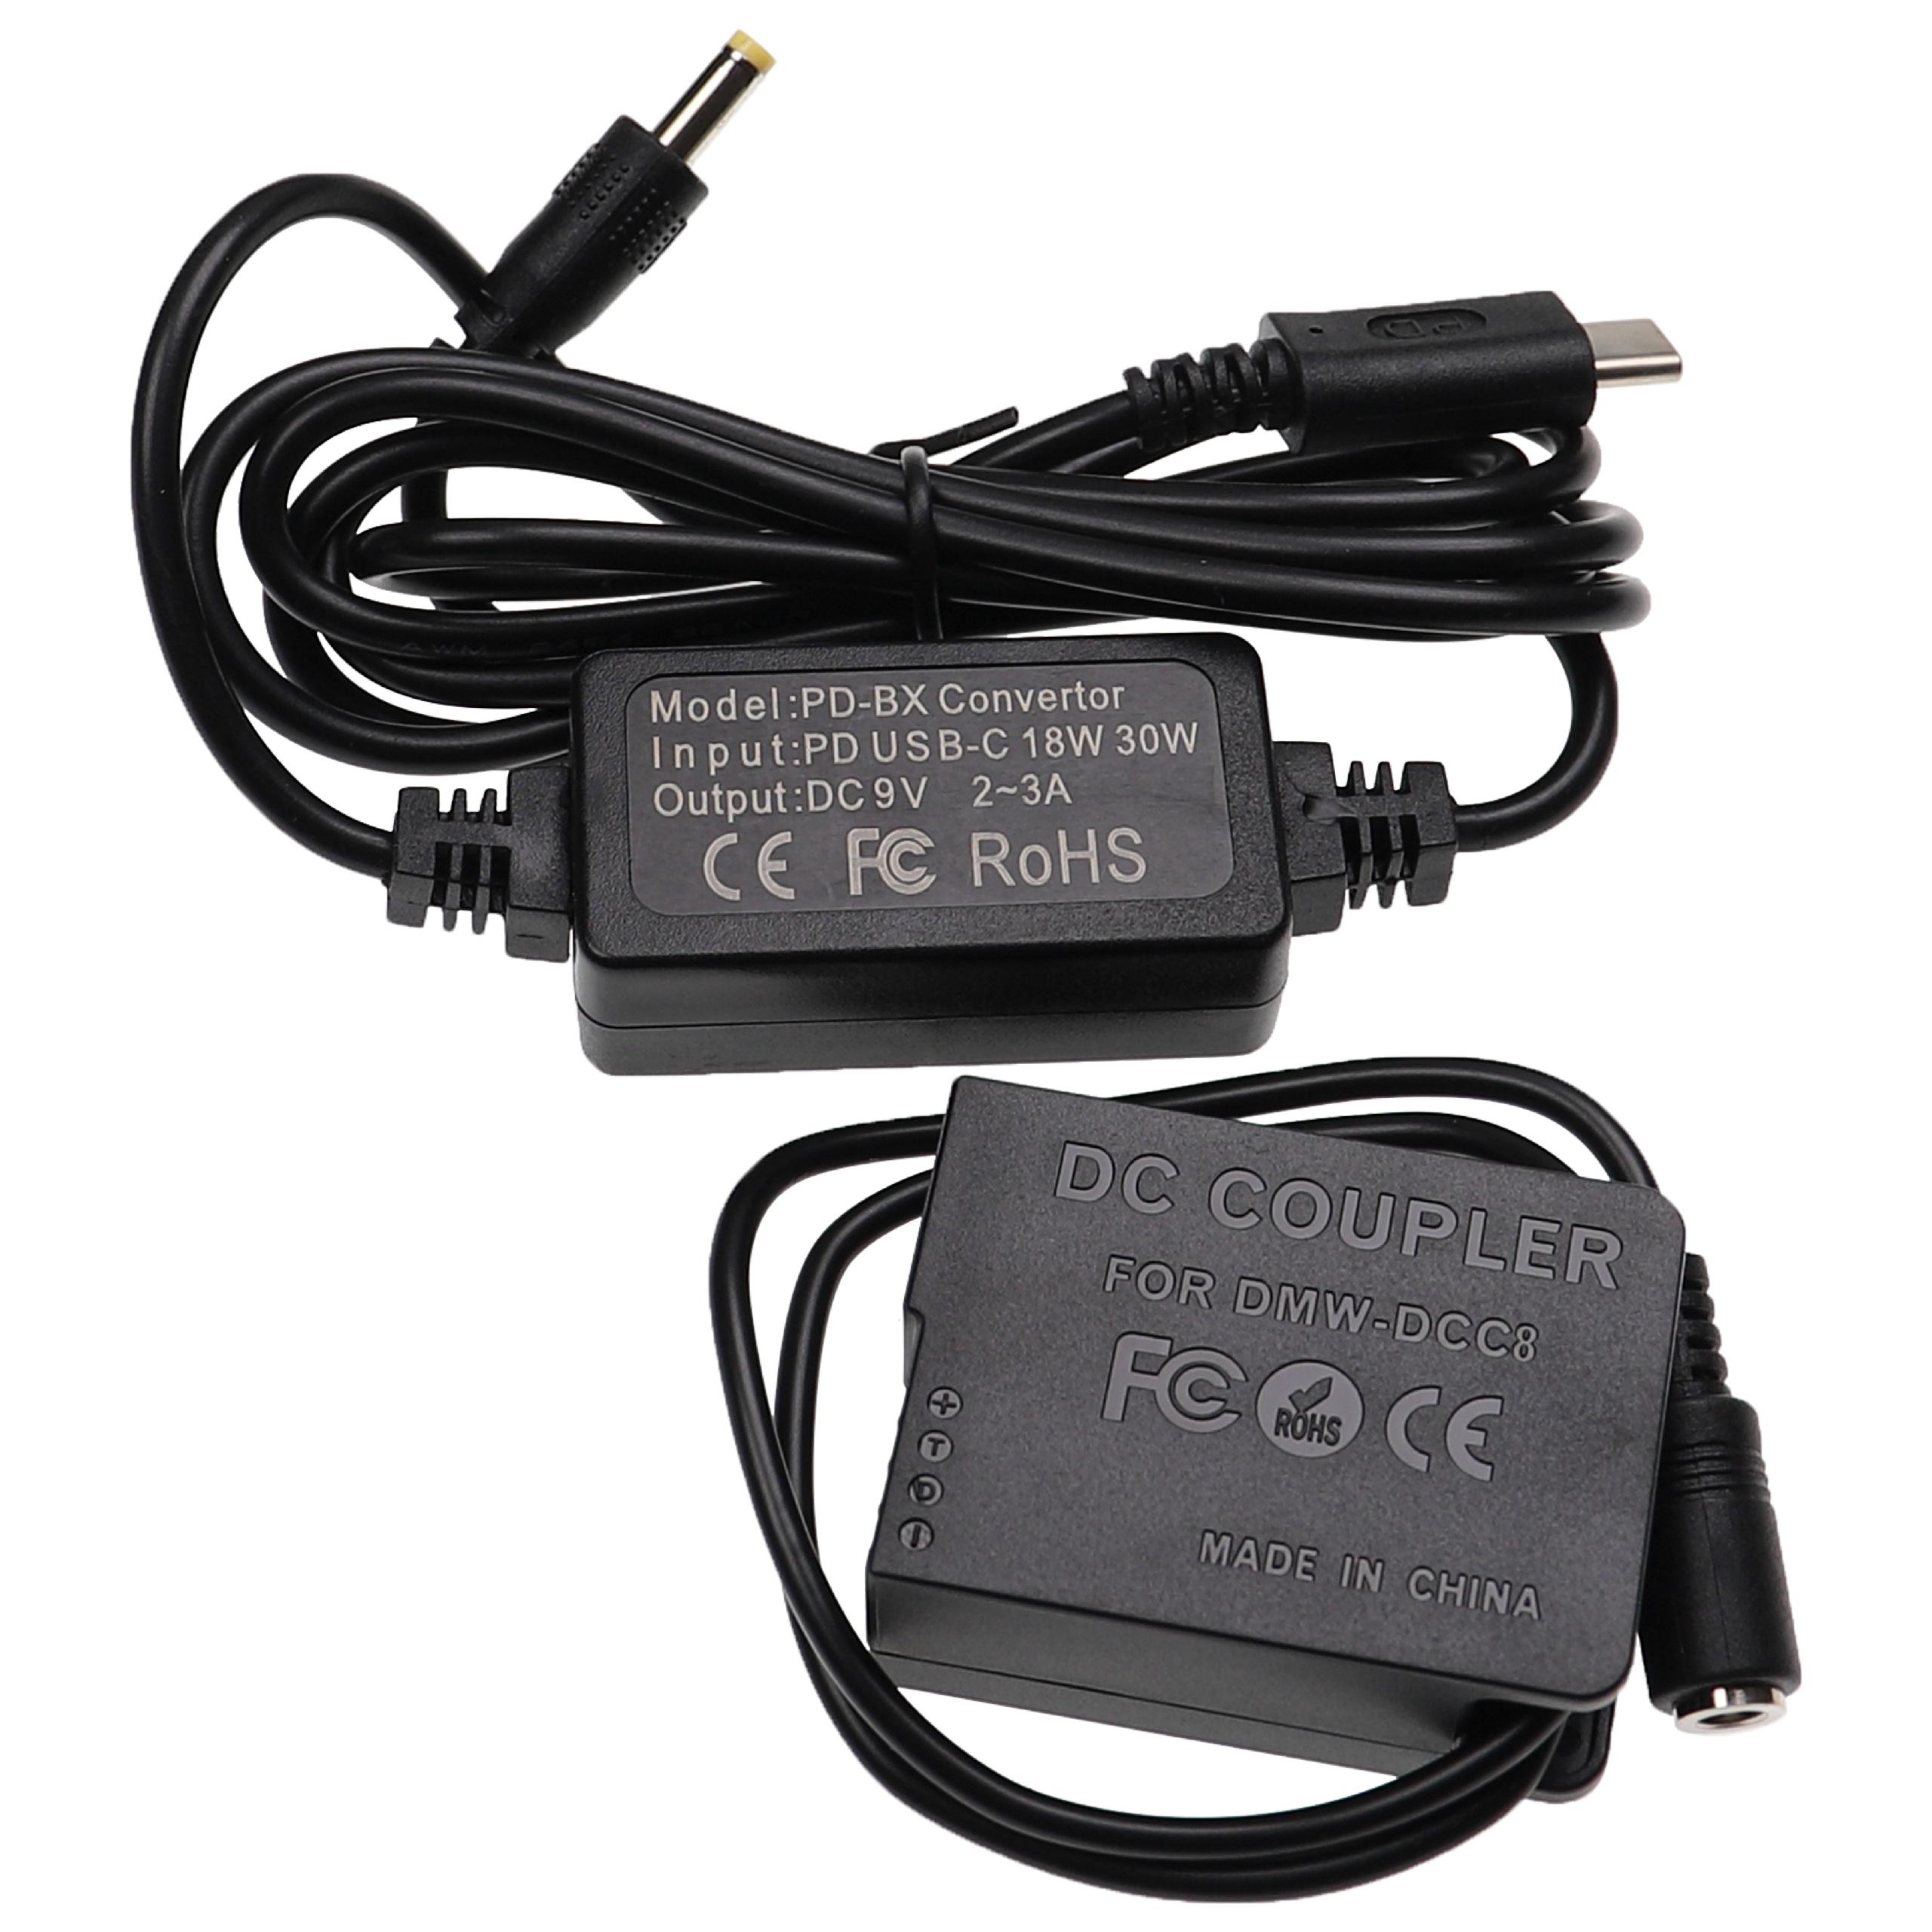 Fuente alimentación USB reemplaza Panasonic DMW-AC8 para cámaras + acoplador CC reemplaza Panasonic DMW-DCC8